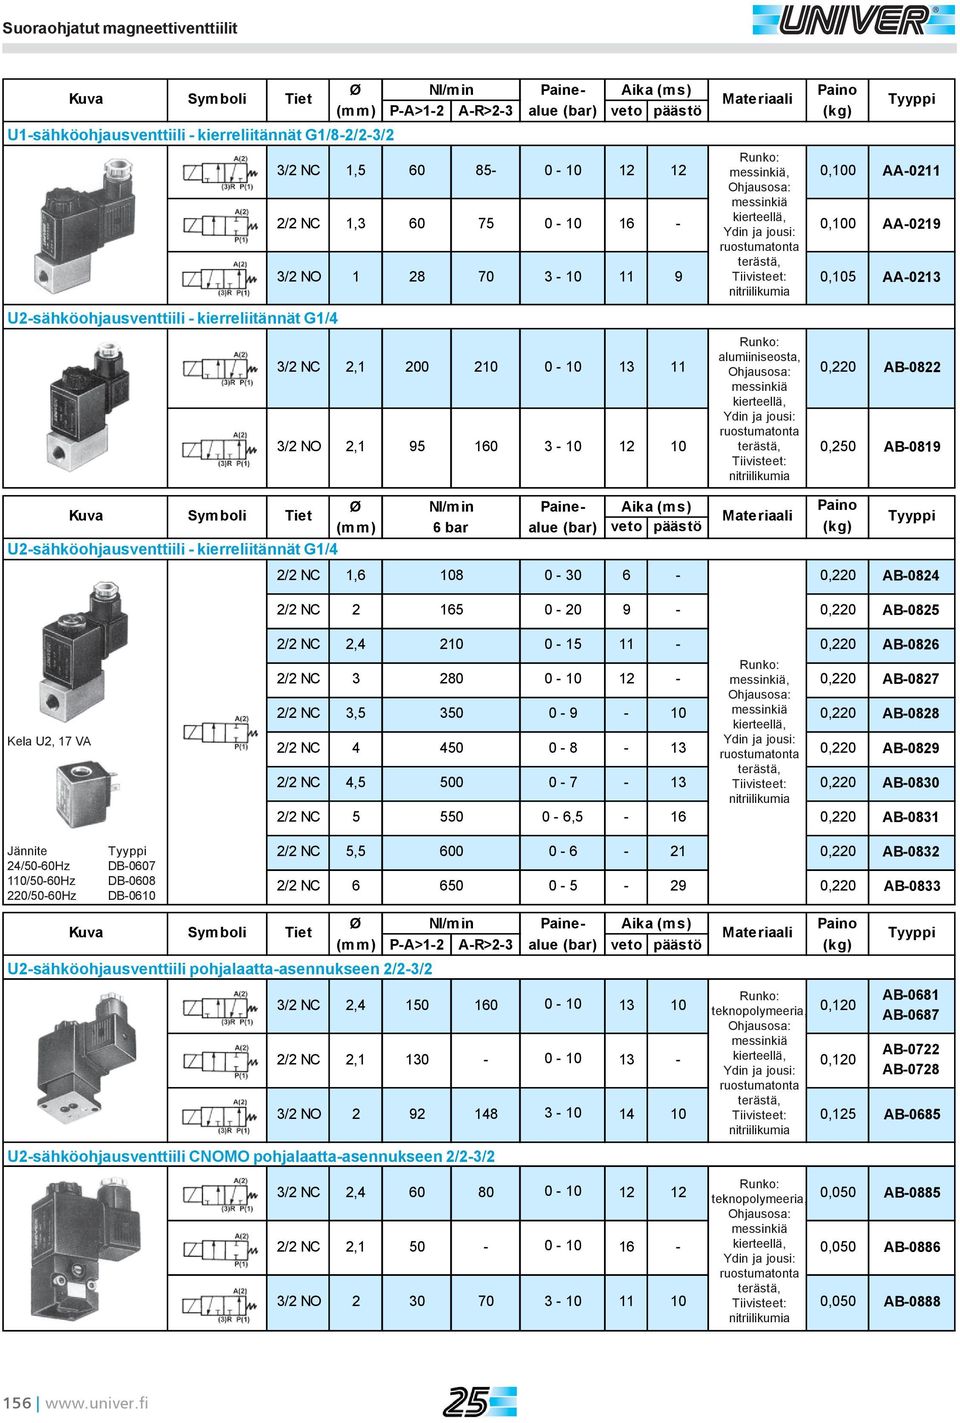 päästö (mm) 6 bar -sähköohjausventtiili - kierreliitännät G1/4 2/2 NC 1,6 108 0-30 6-0,220 AB-0824 2/2 NC 2 165 0-20 9-0,220 AB-0825 Kela, 17 VA Jännite 24/50-60Hz 110/50-60Hz 220/50-60Hz DB-0607